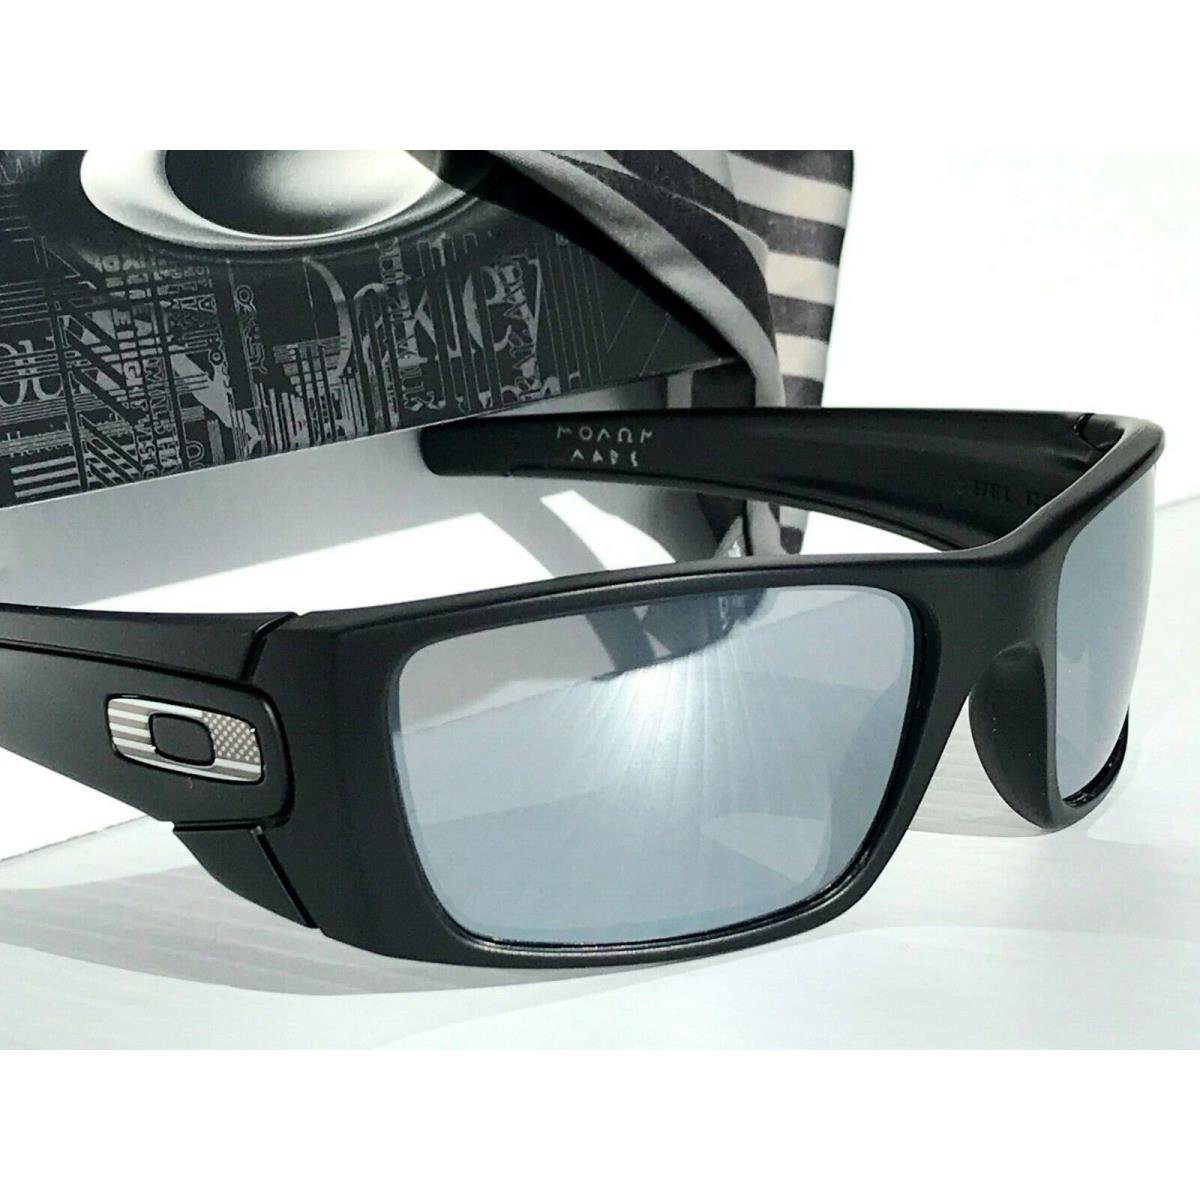 Oakley sunglasses Fuel Cell - Black Frame, Silver Lens 10